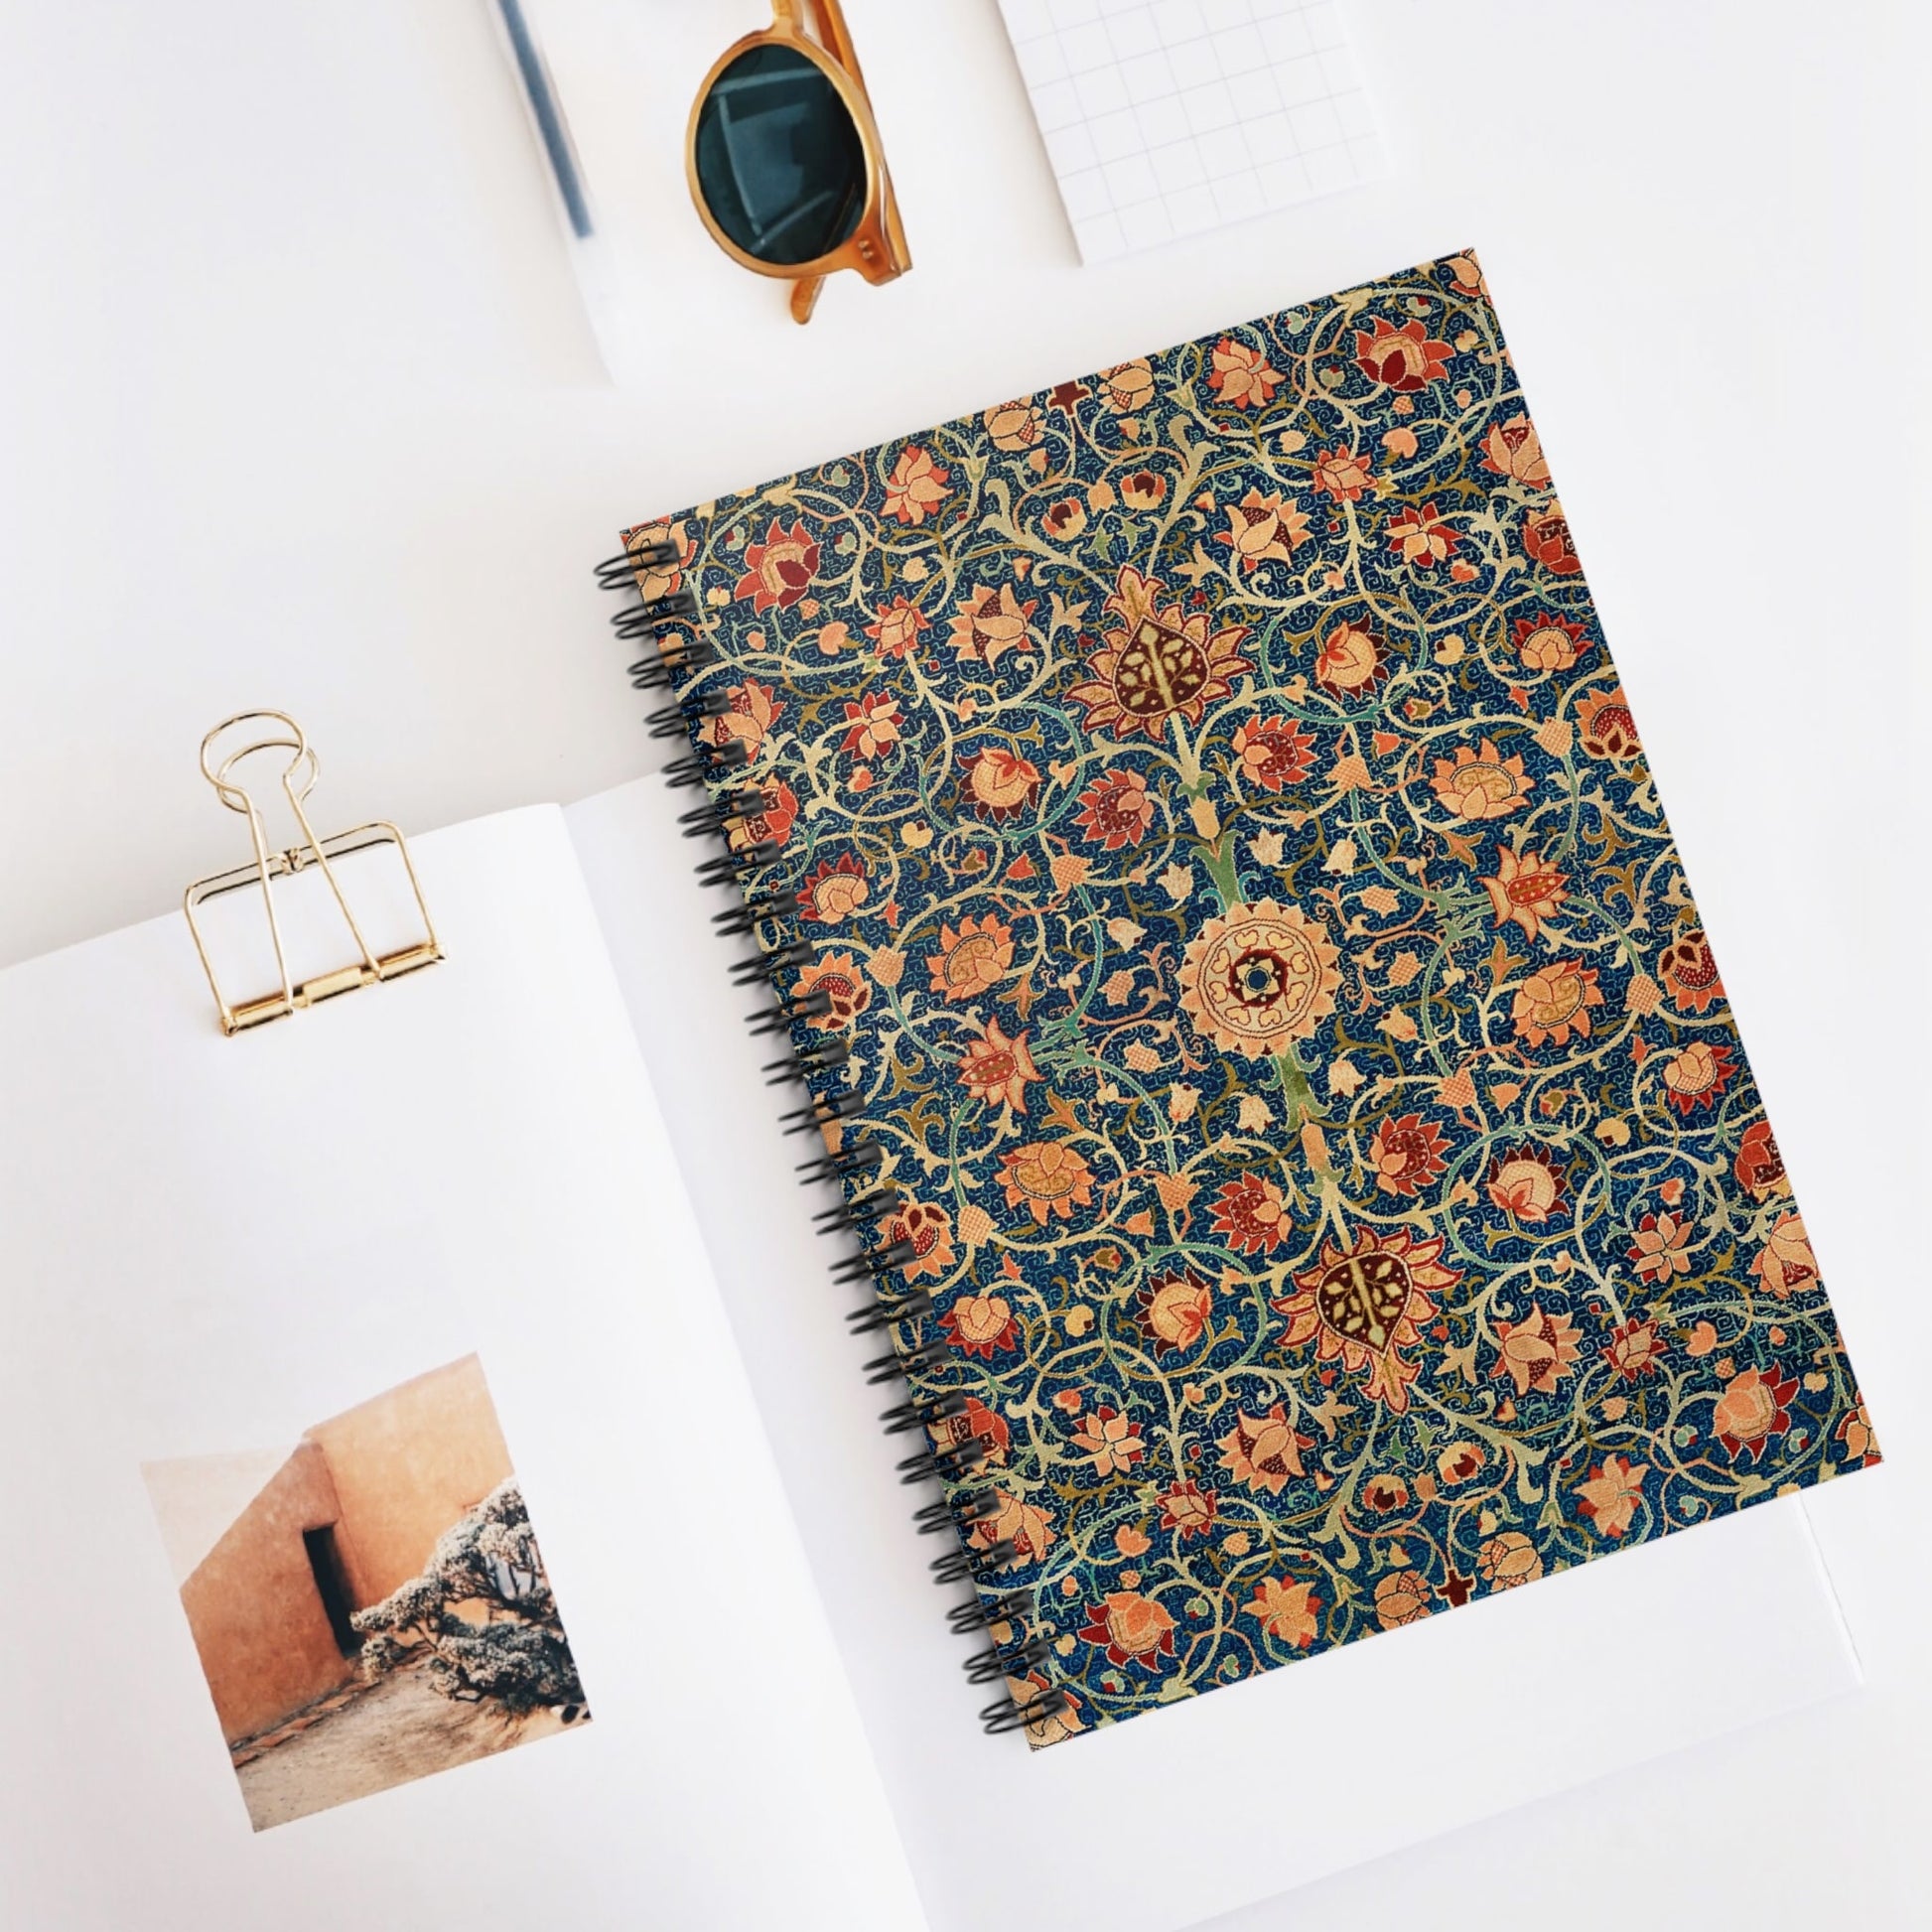 Aesthetic Floral Spiral Notebook Displayed on Desk